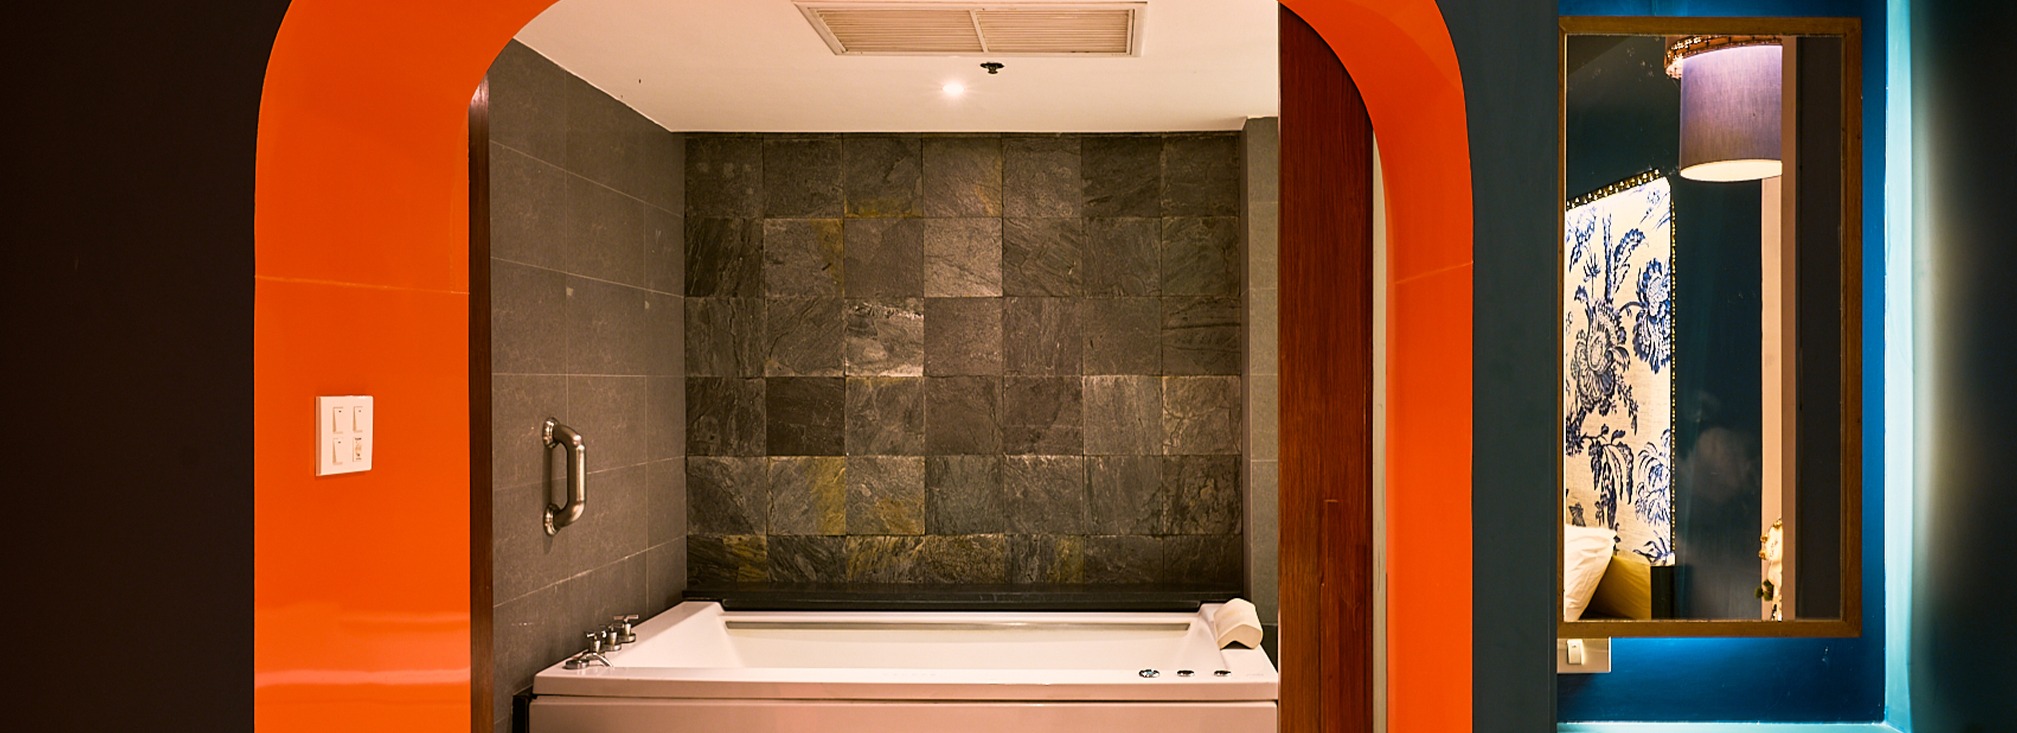 Tara Bangkok Soapy massage suite room with spa